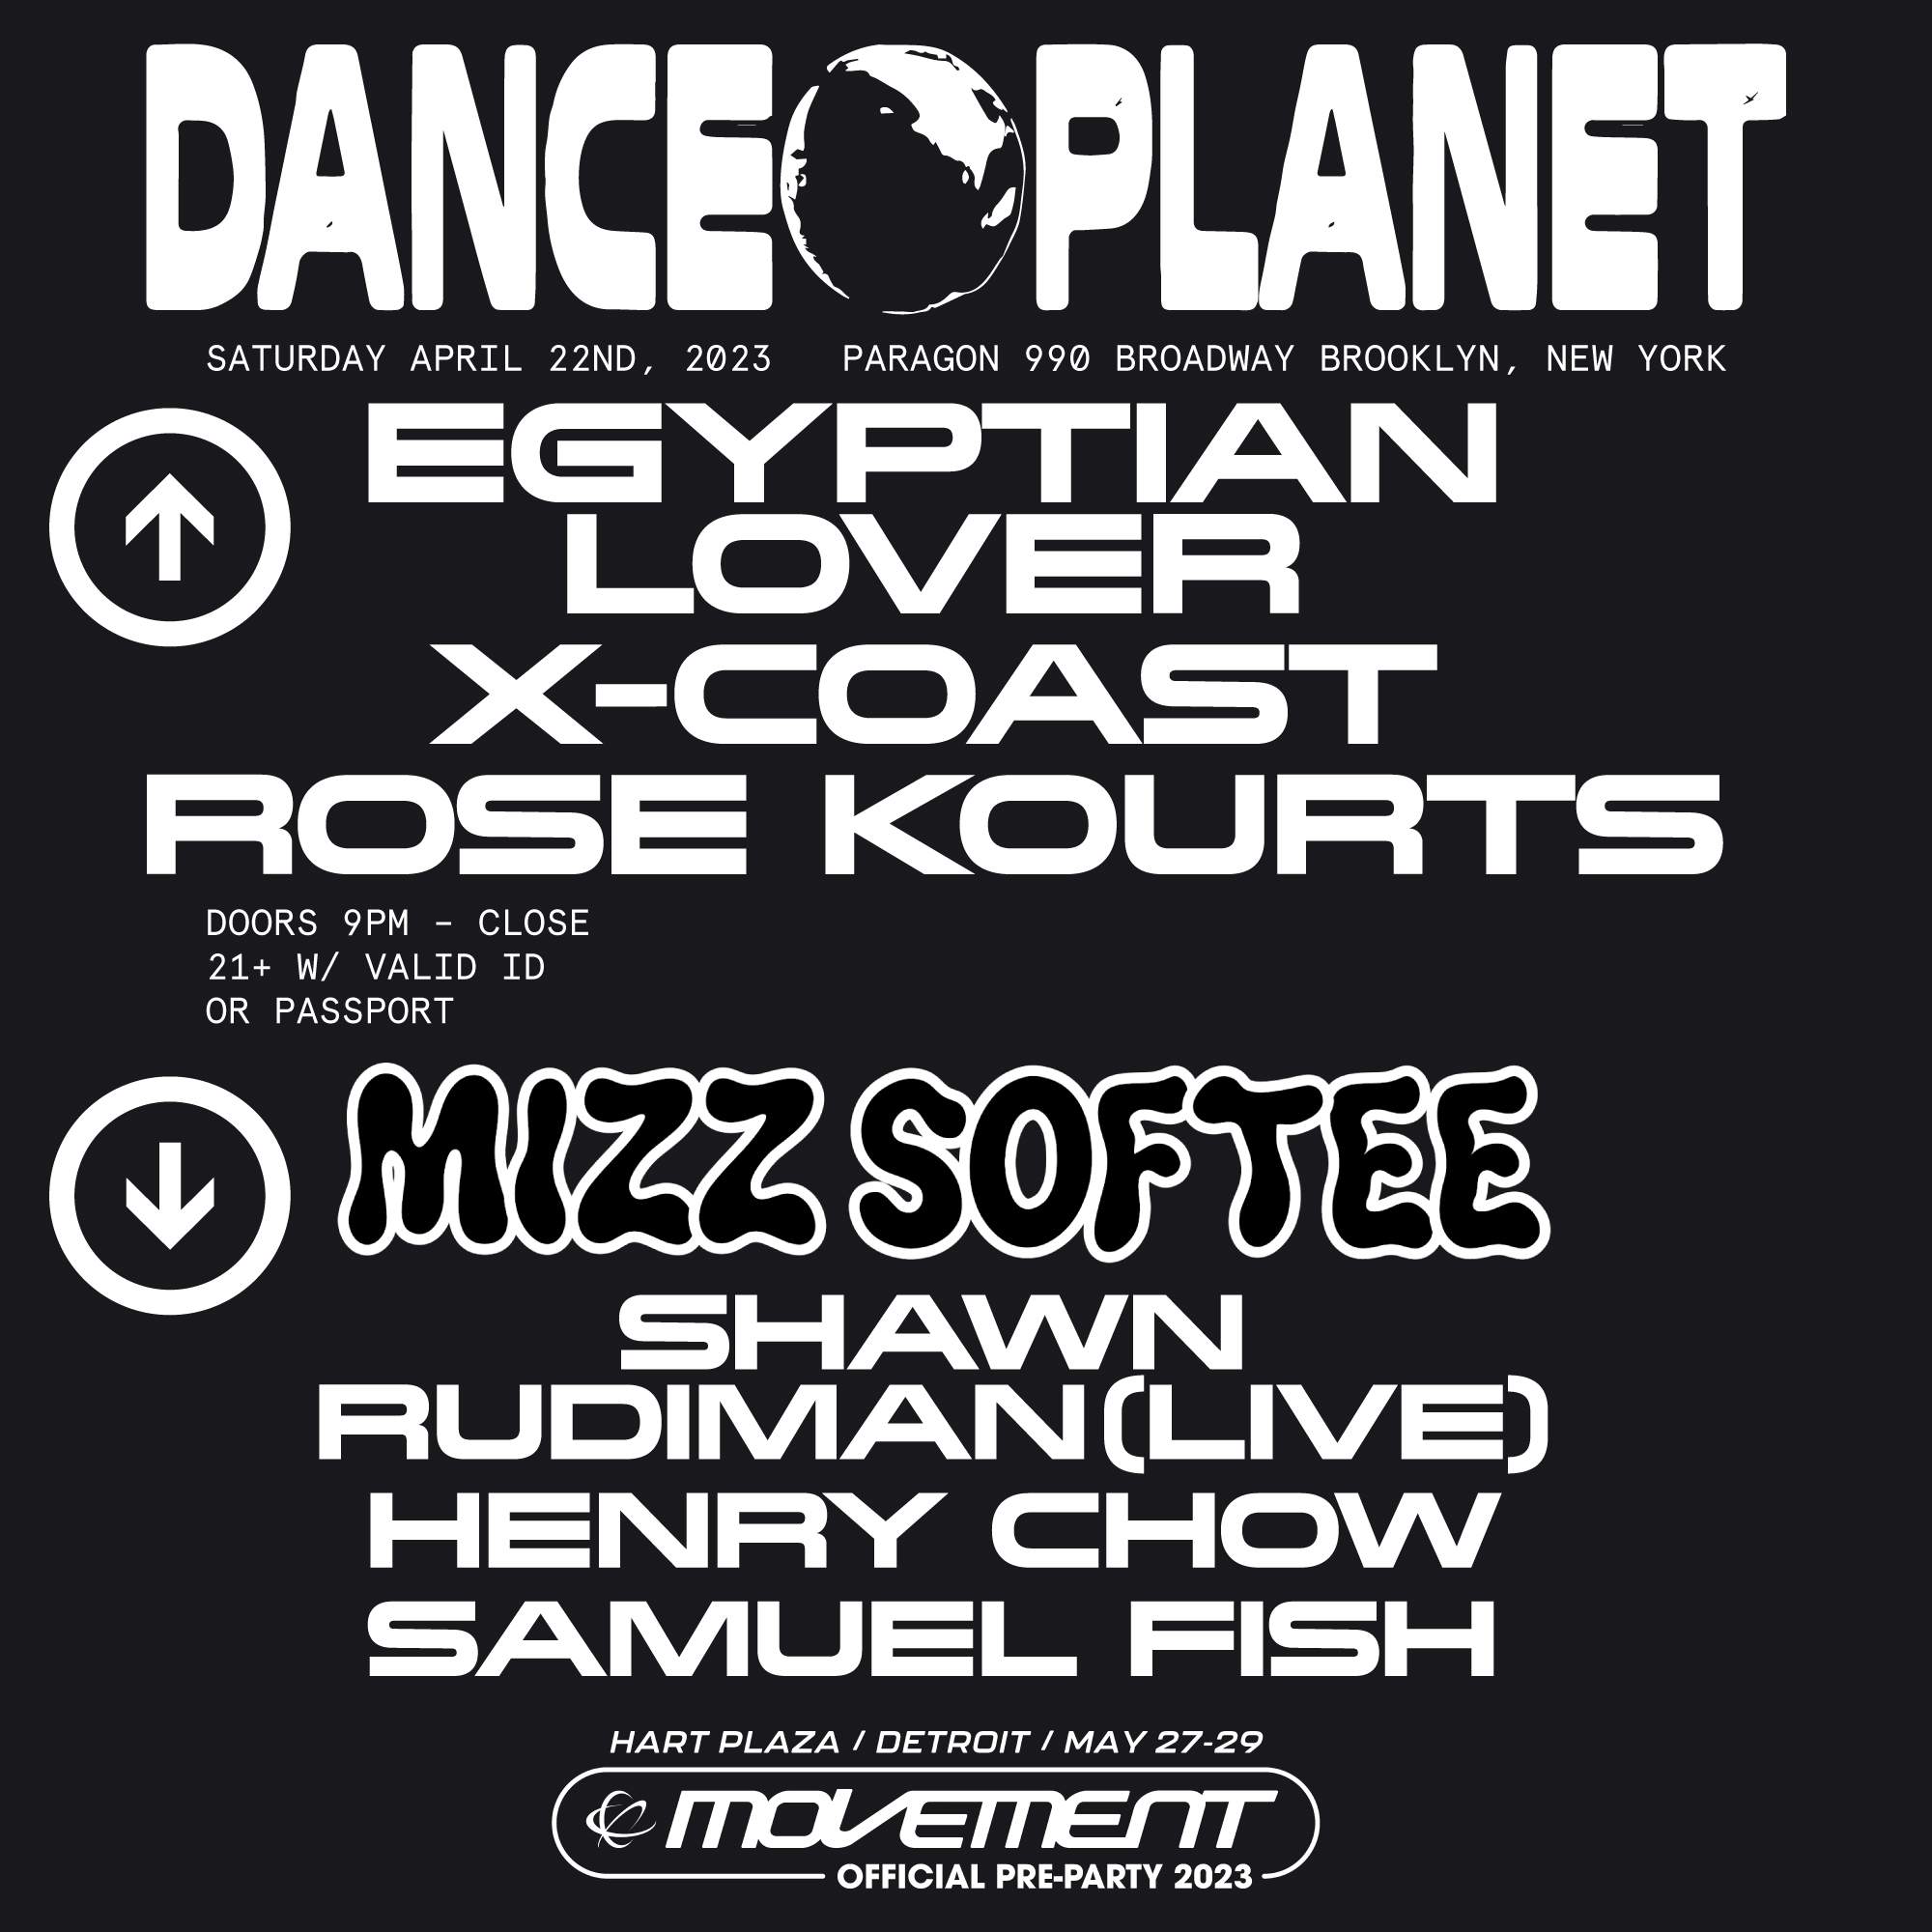 Dance Planet with Egyptian Lover X-Coast Rose Kourts + MIZZ SOFTEE - Página frontal